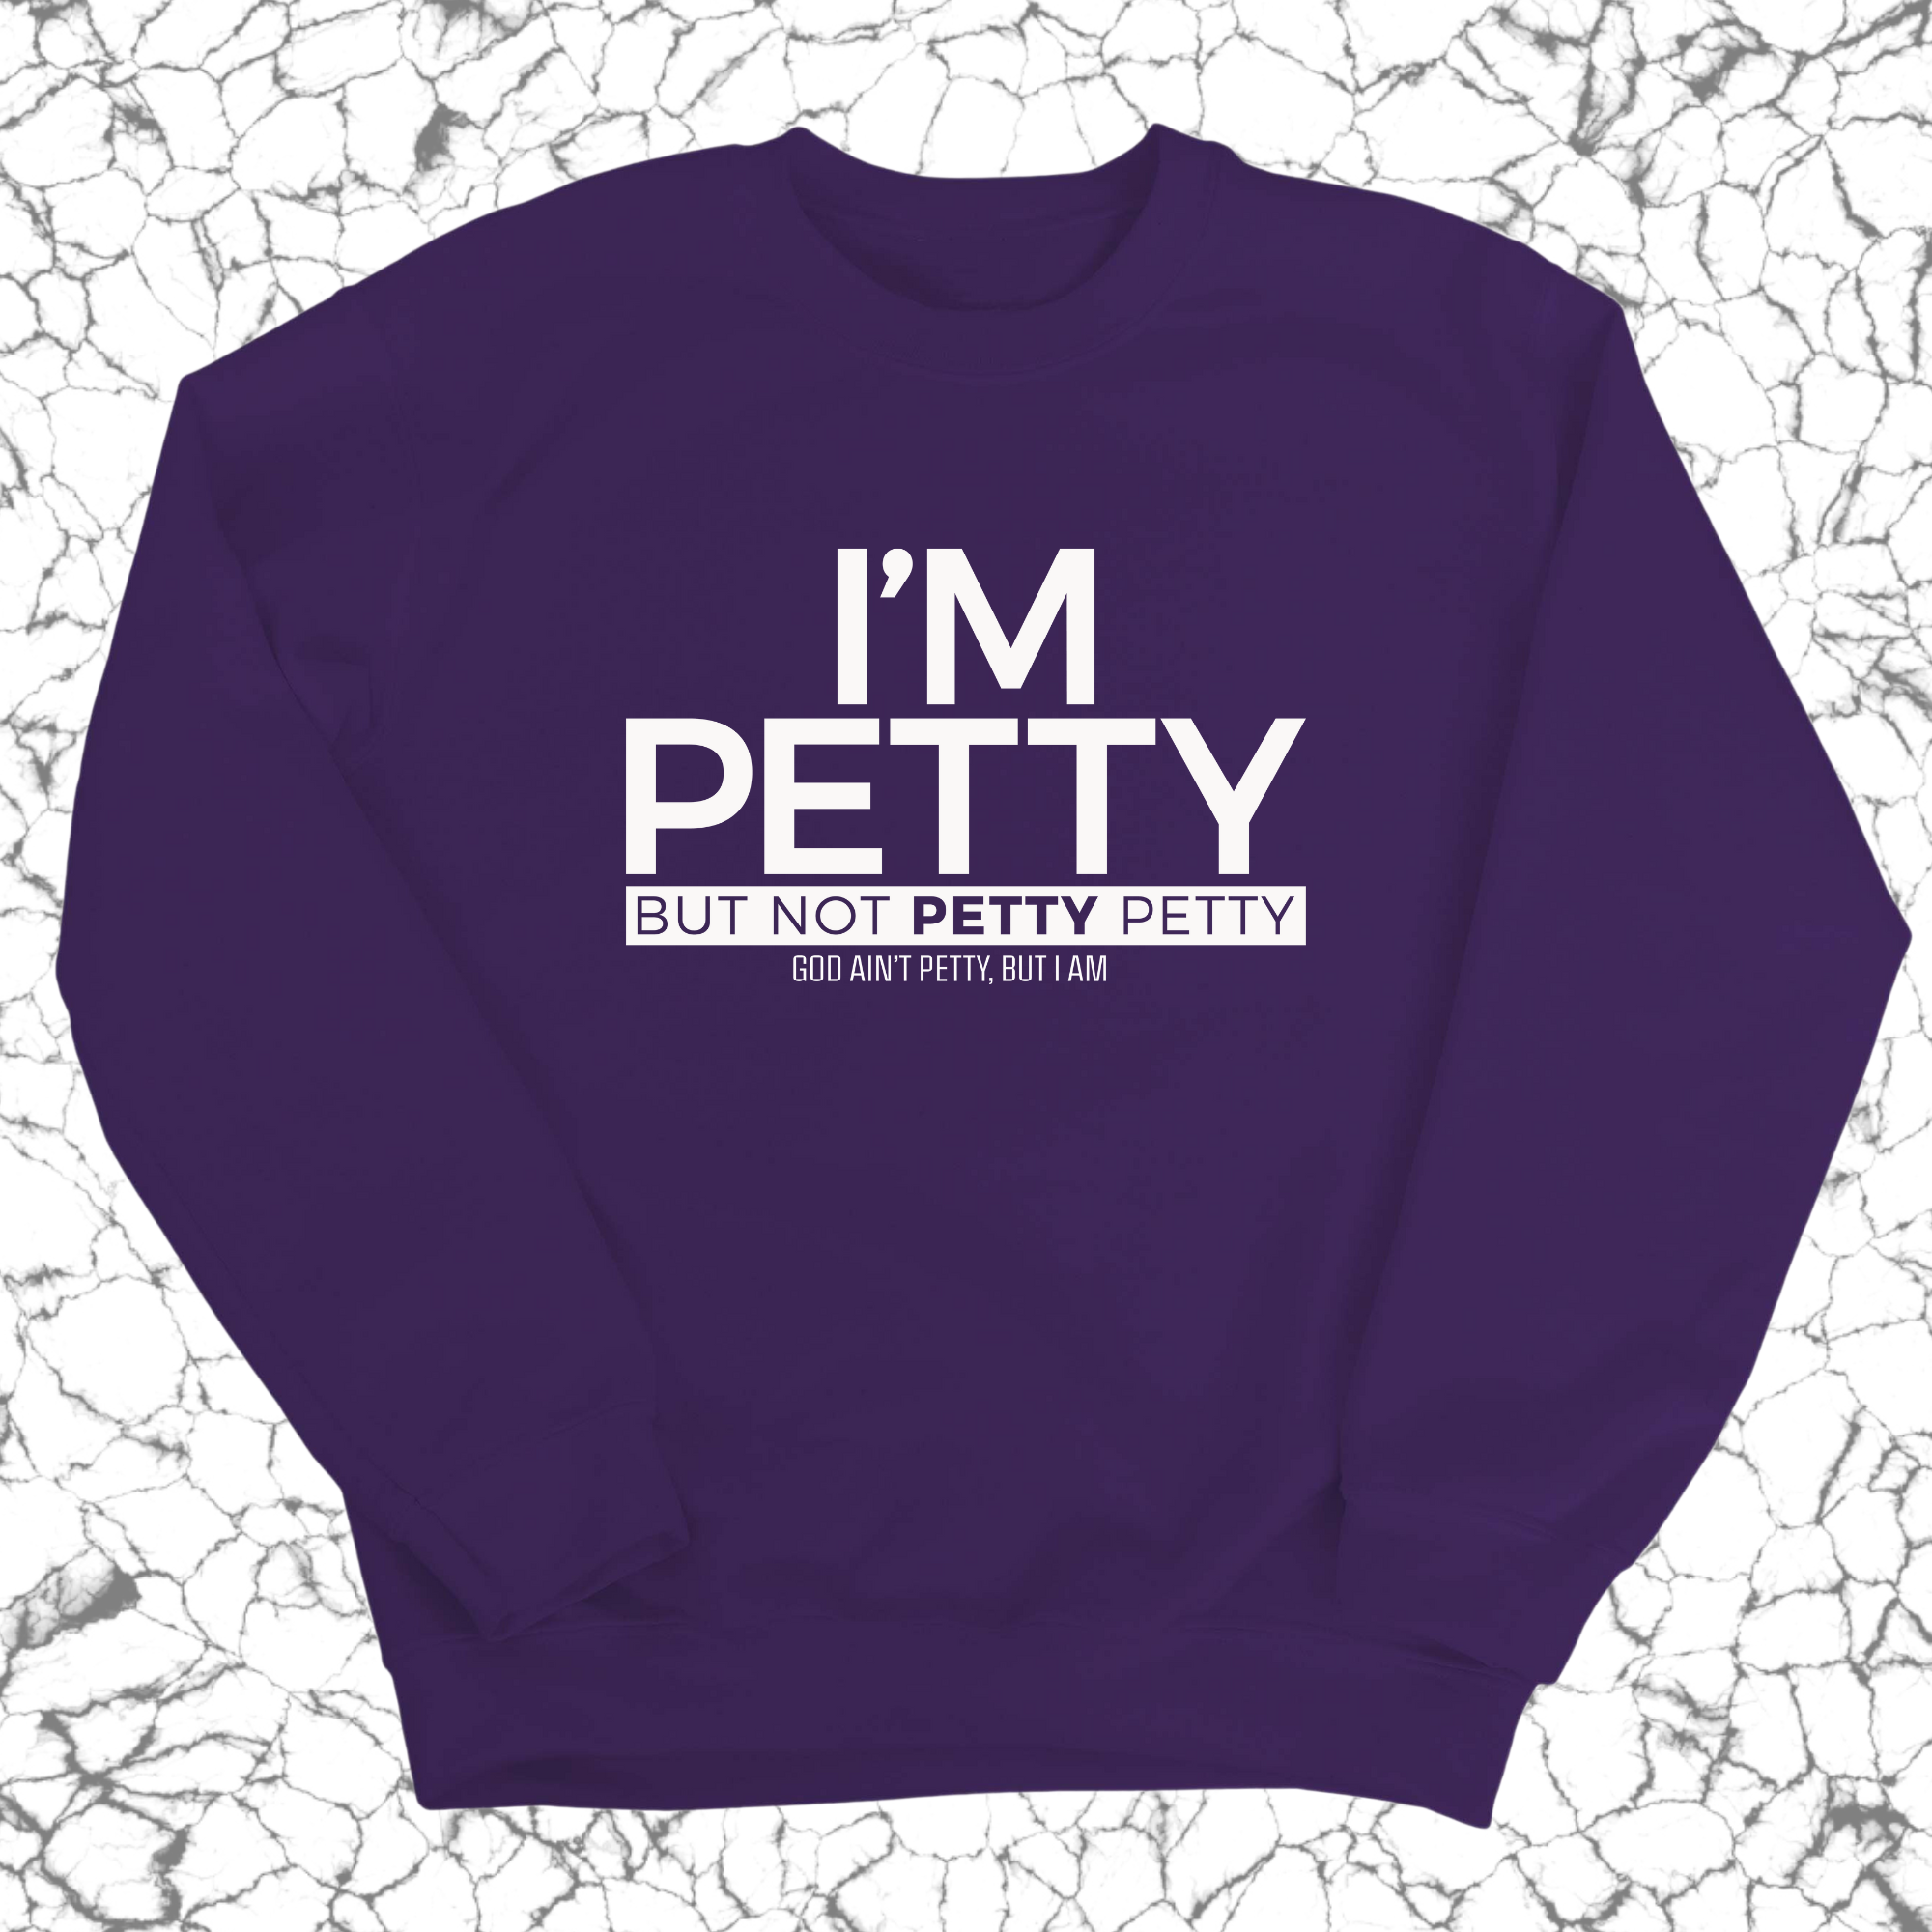 I'm Petty but not petty petty Unisex Sweatshirt-Sweatshirt-The Original God Ain't Petty But I Am